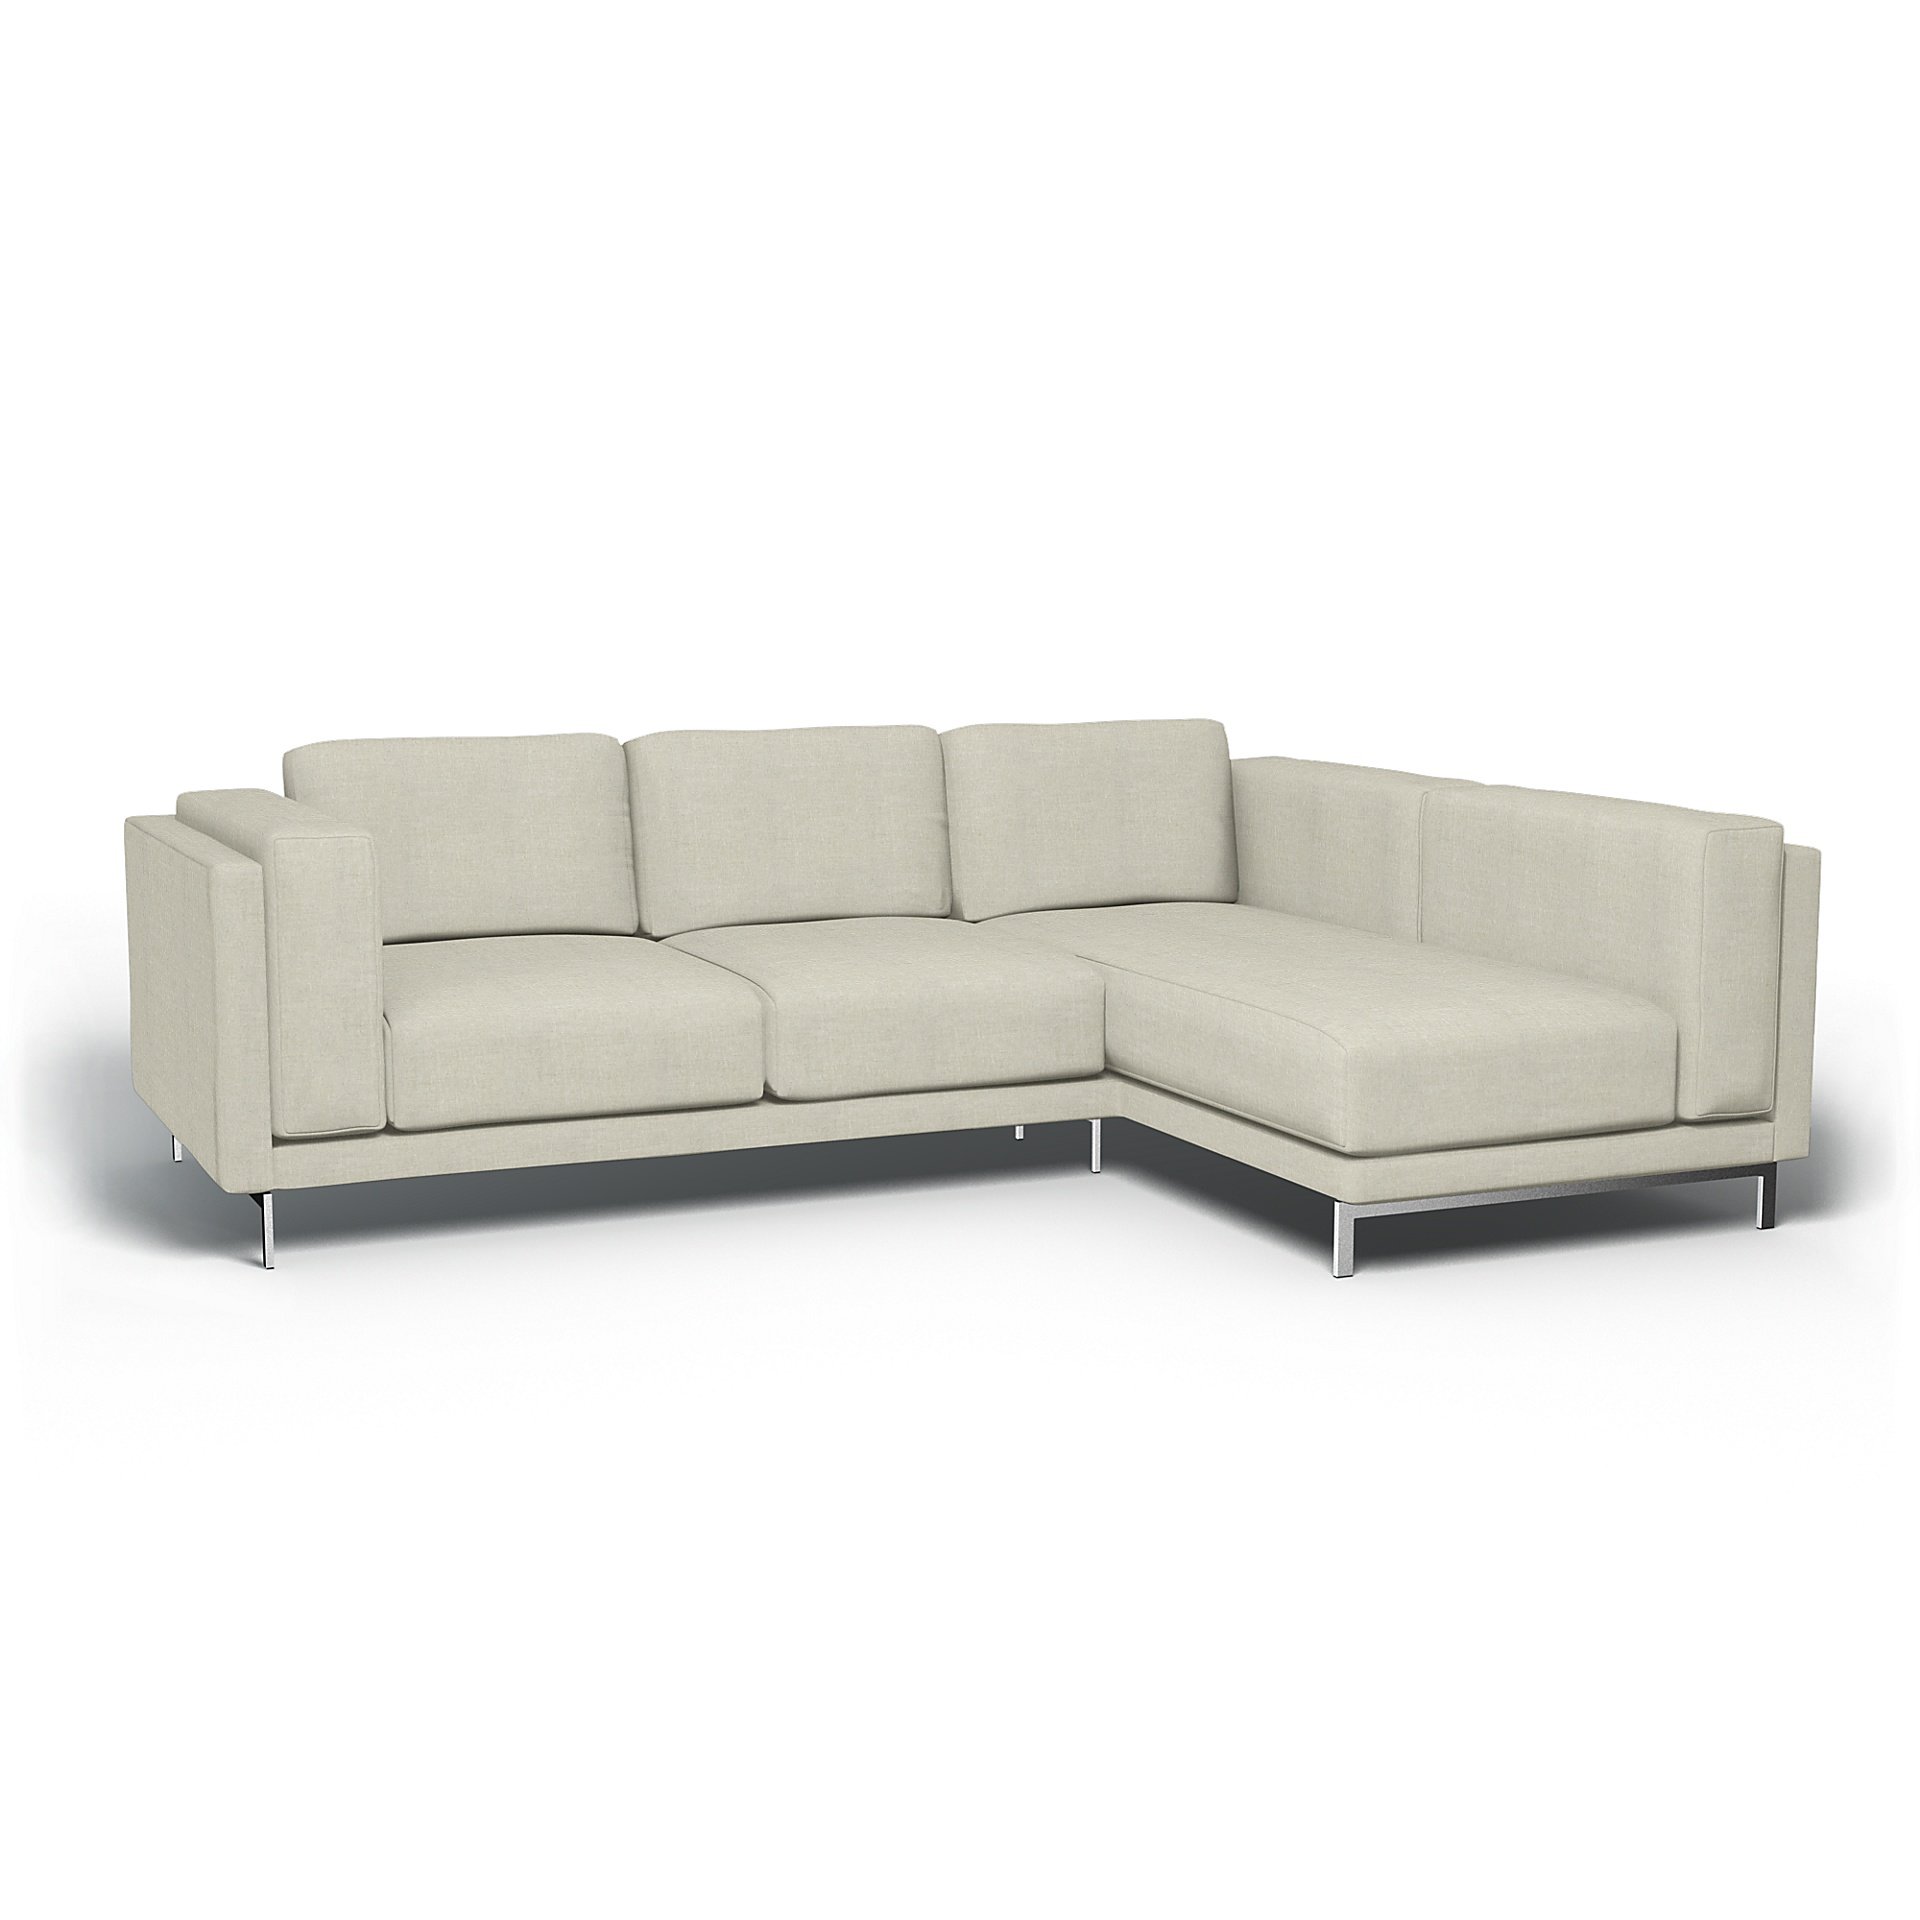 3 IKEA NOCKEBY Three Seat Sofa Cover Slipcover RISANE WHITE New in Box! 